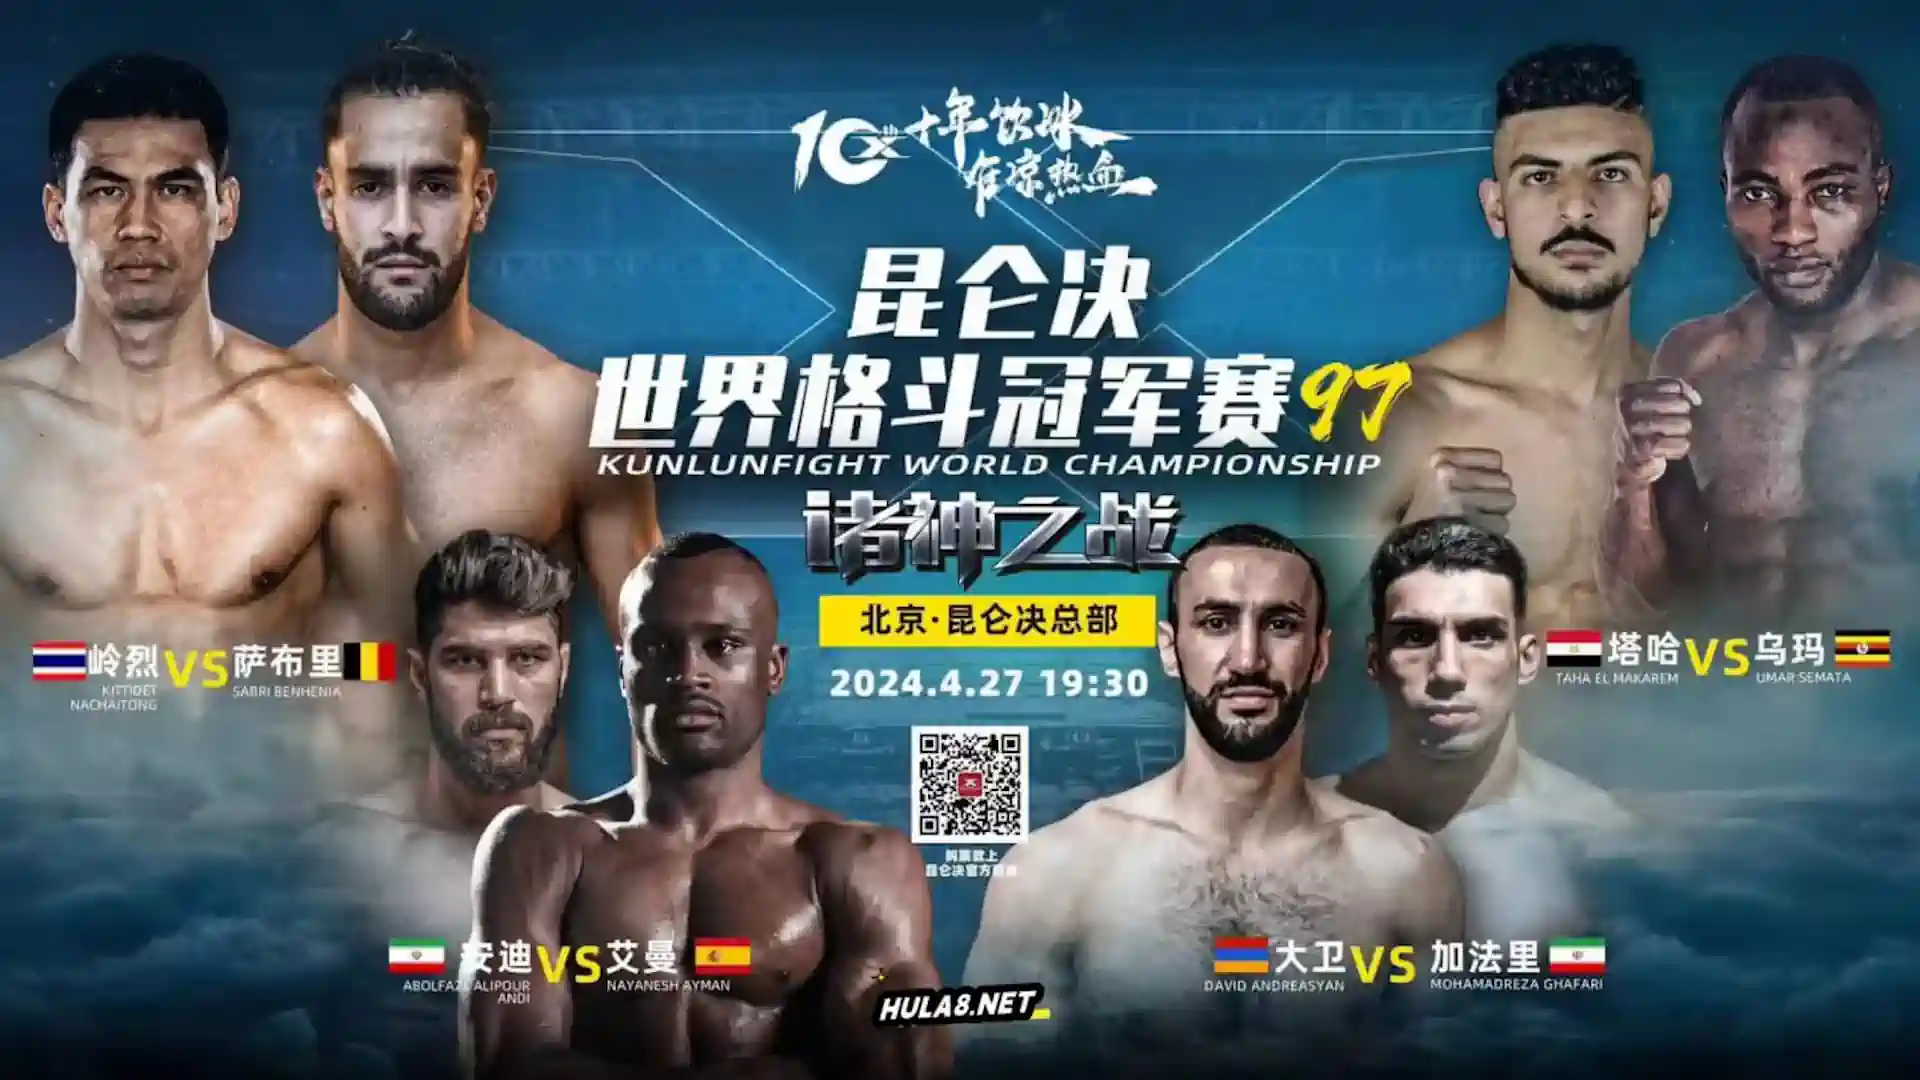 David Andreasyan will fight in Kunlun Fight Grand Prix (online broadcast)